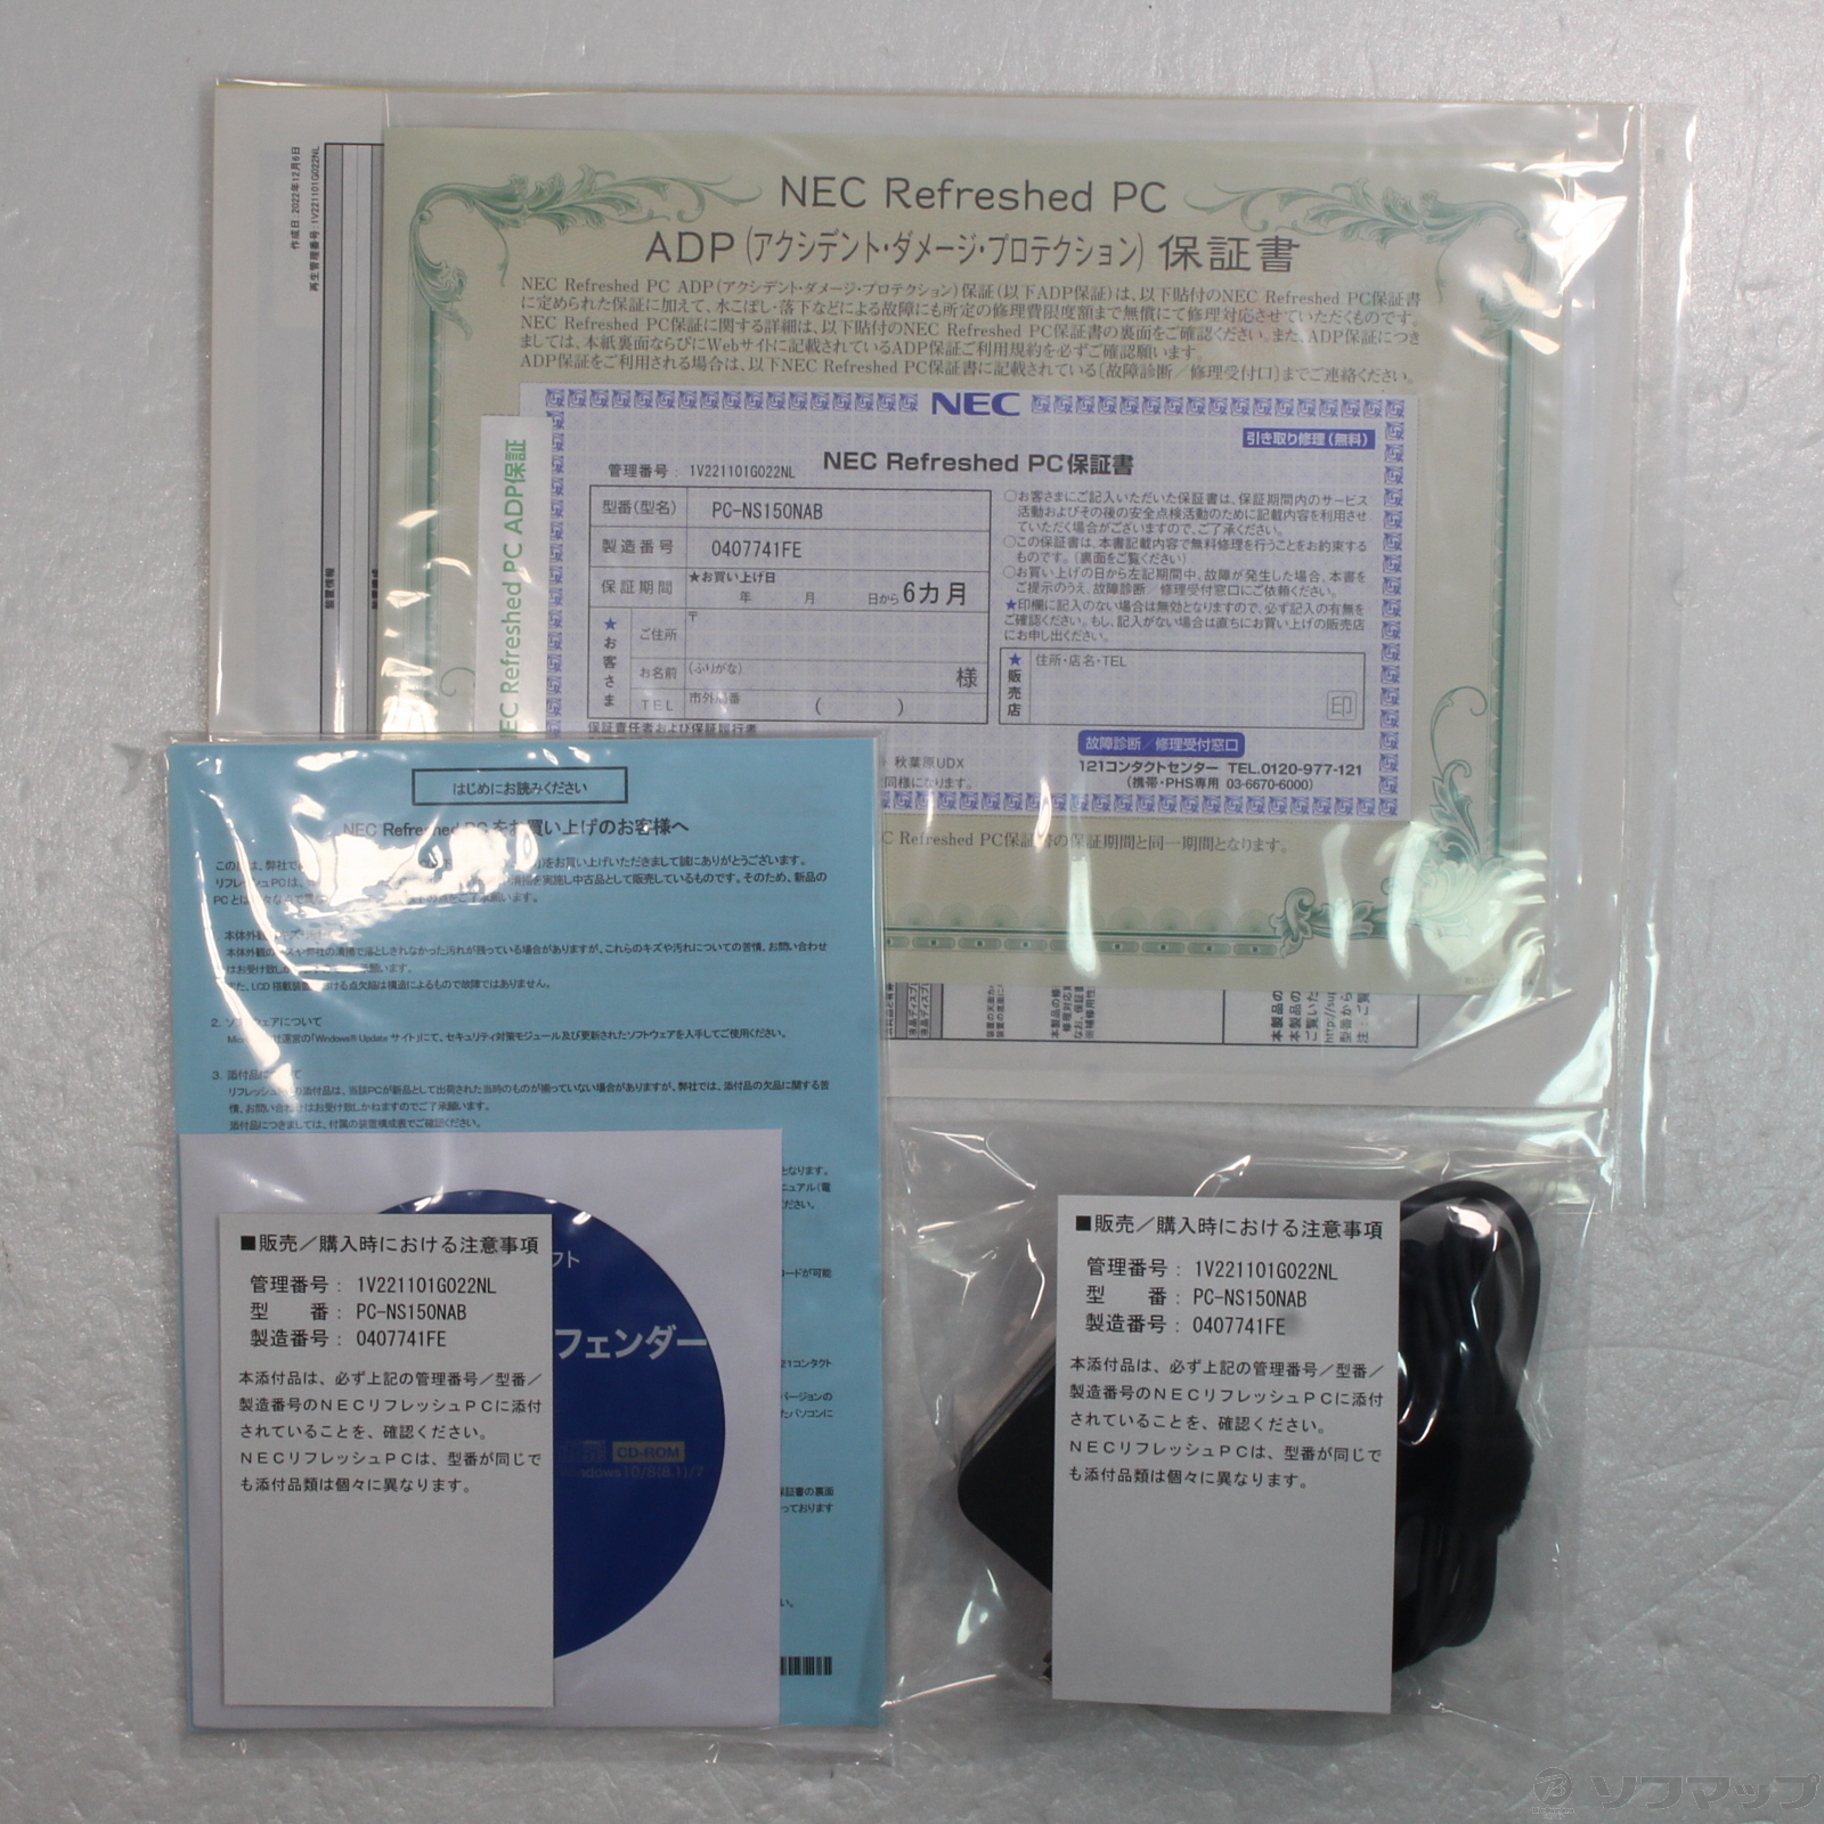 中古品LaVie Note Standard PC-NS150NAB kamuburakku[NEC Refreshed